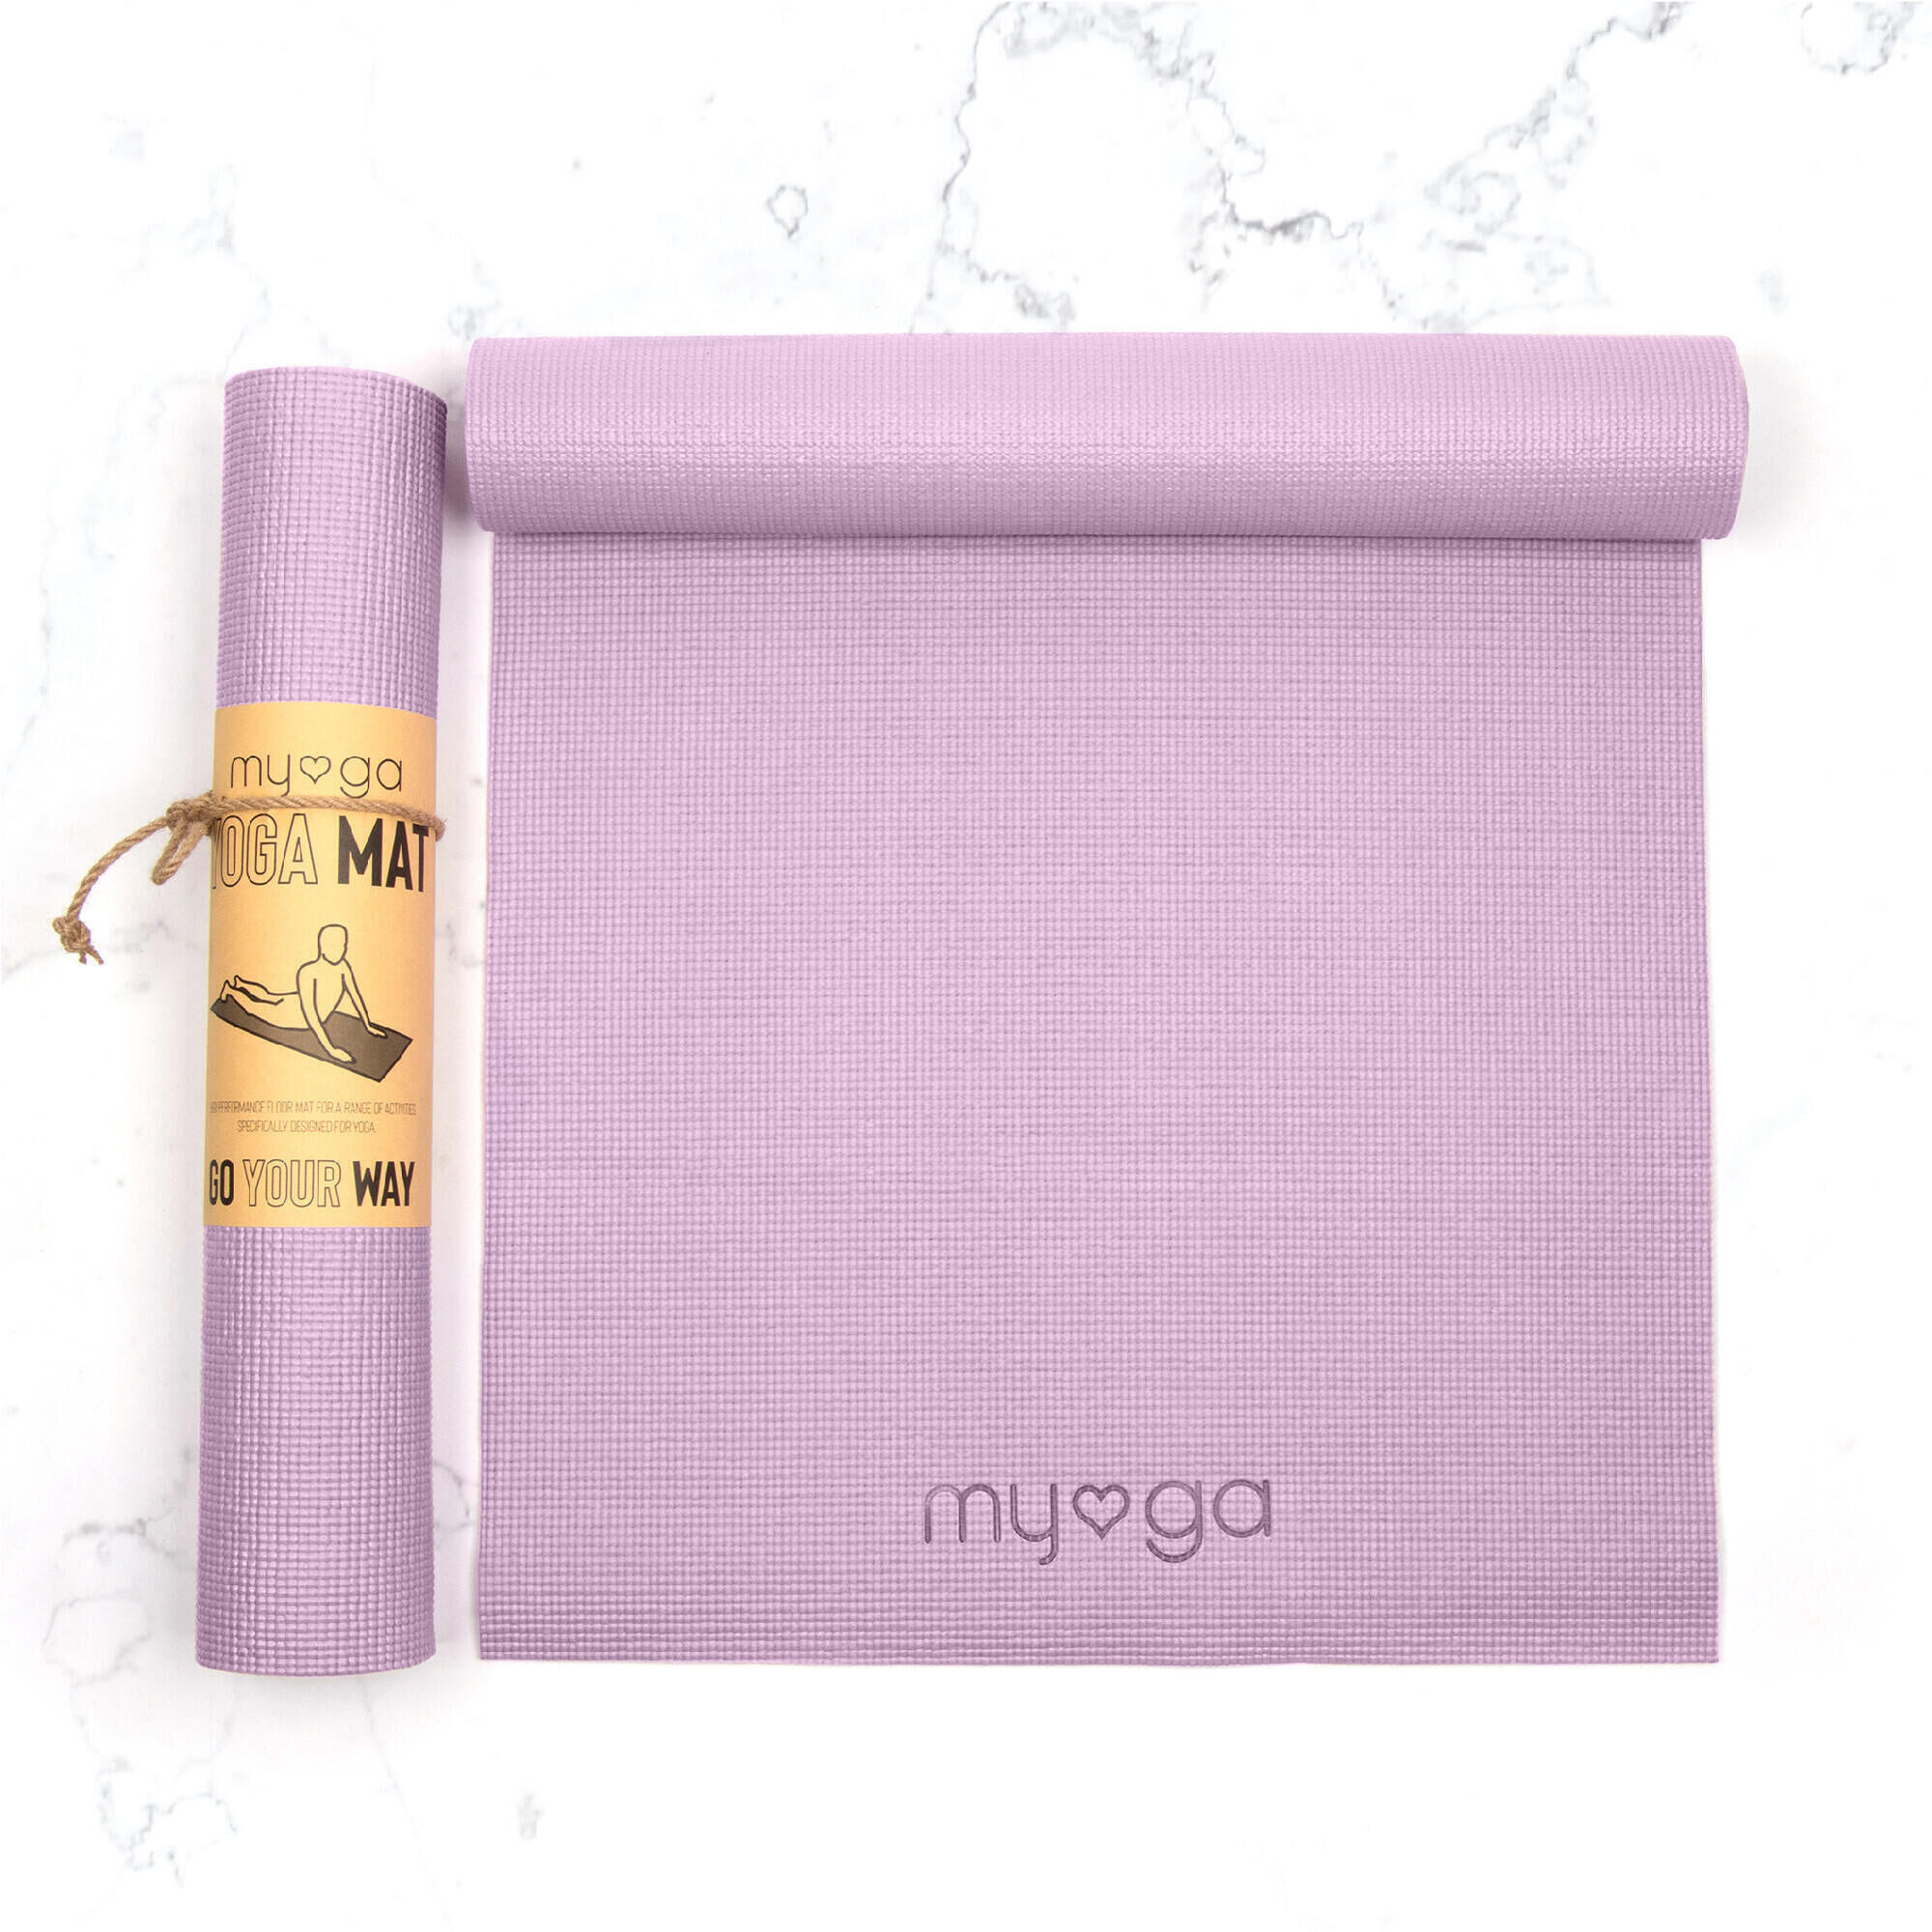 MYGA Myga Entry Level Yoga Mat - Lilac